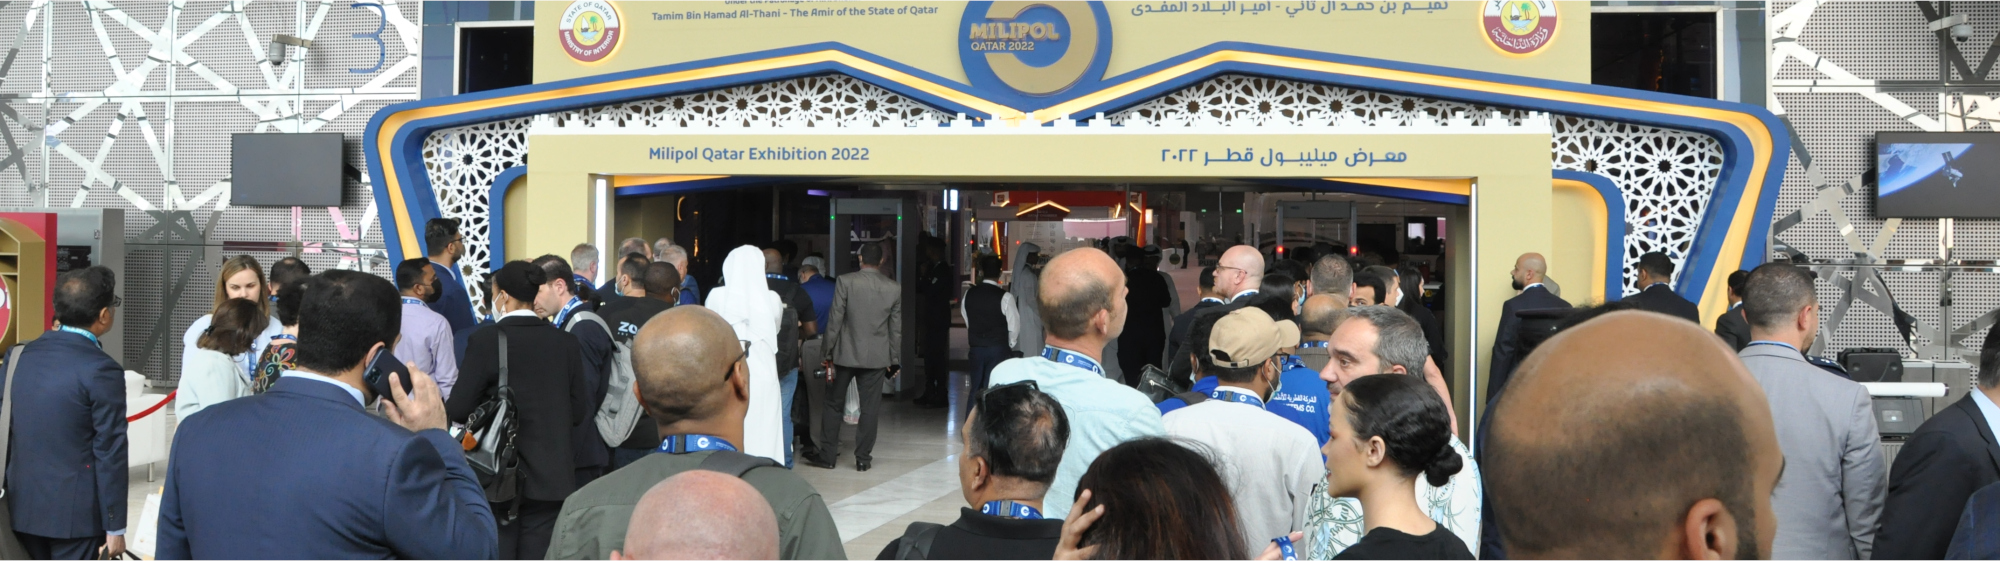 Entrance of Milipol Qatar with plenty of visitors